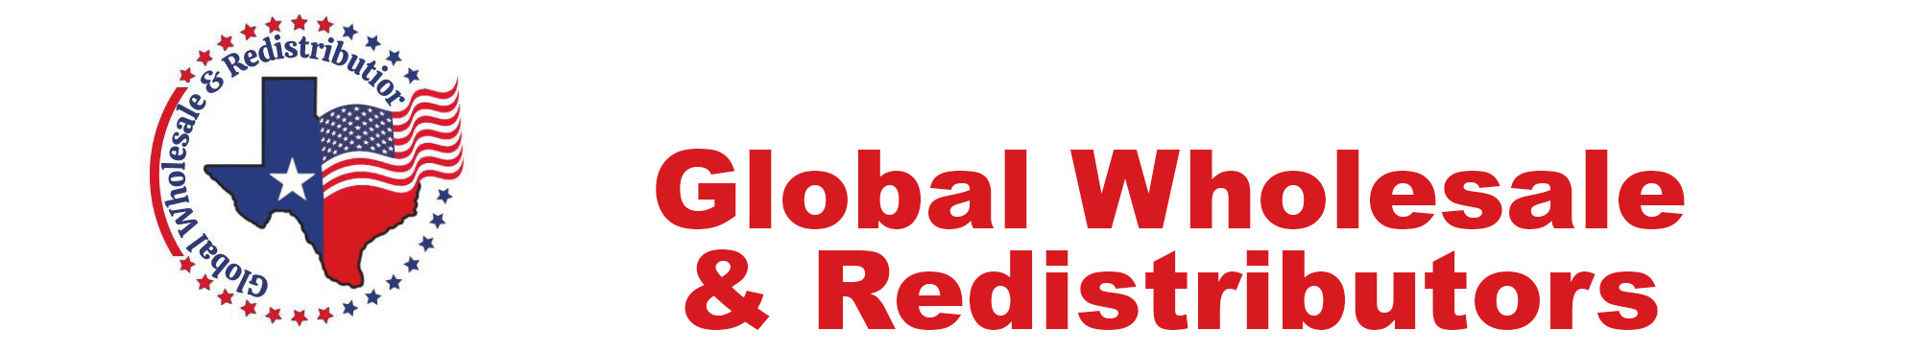 Global Wholesale and Redistributors